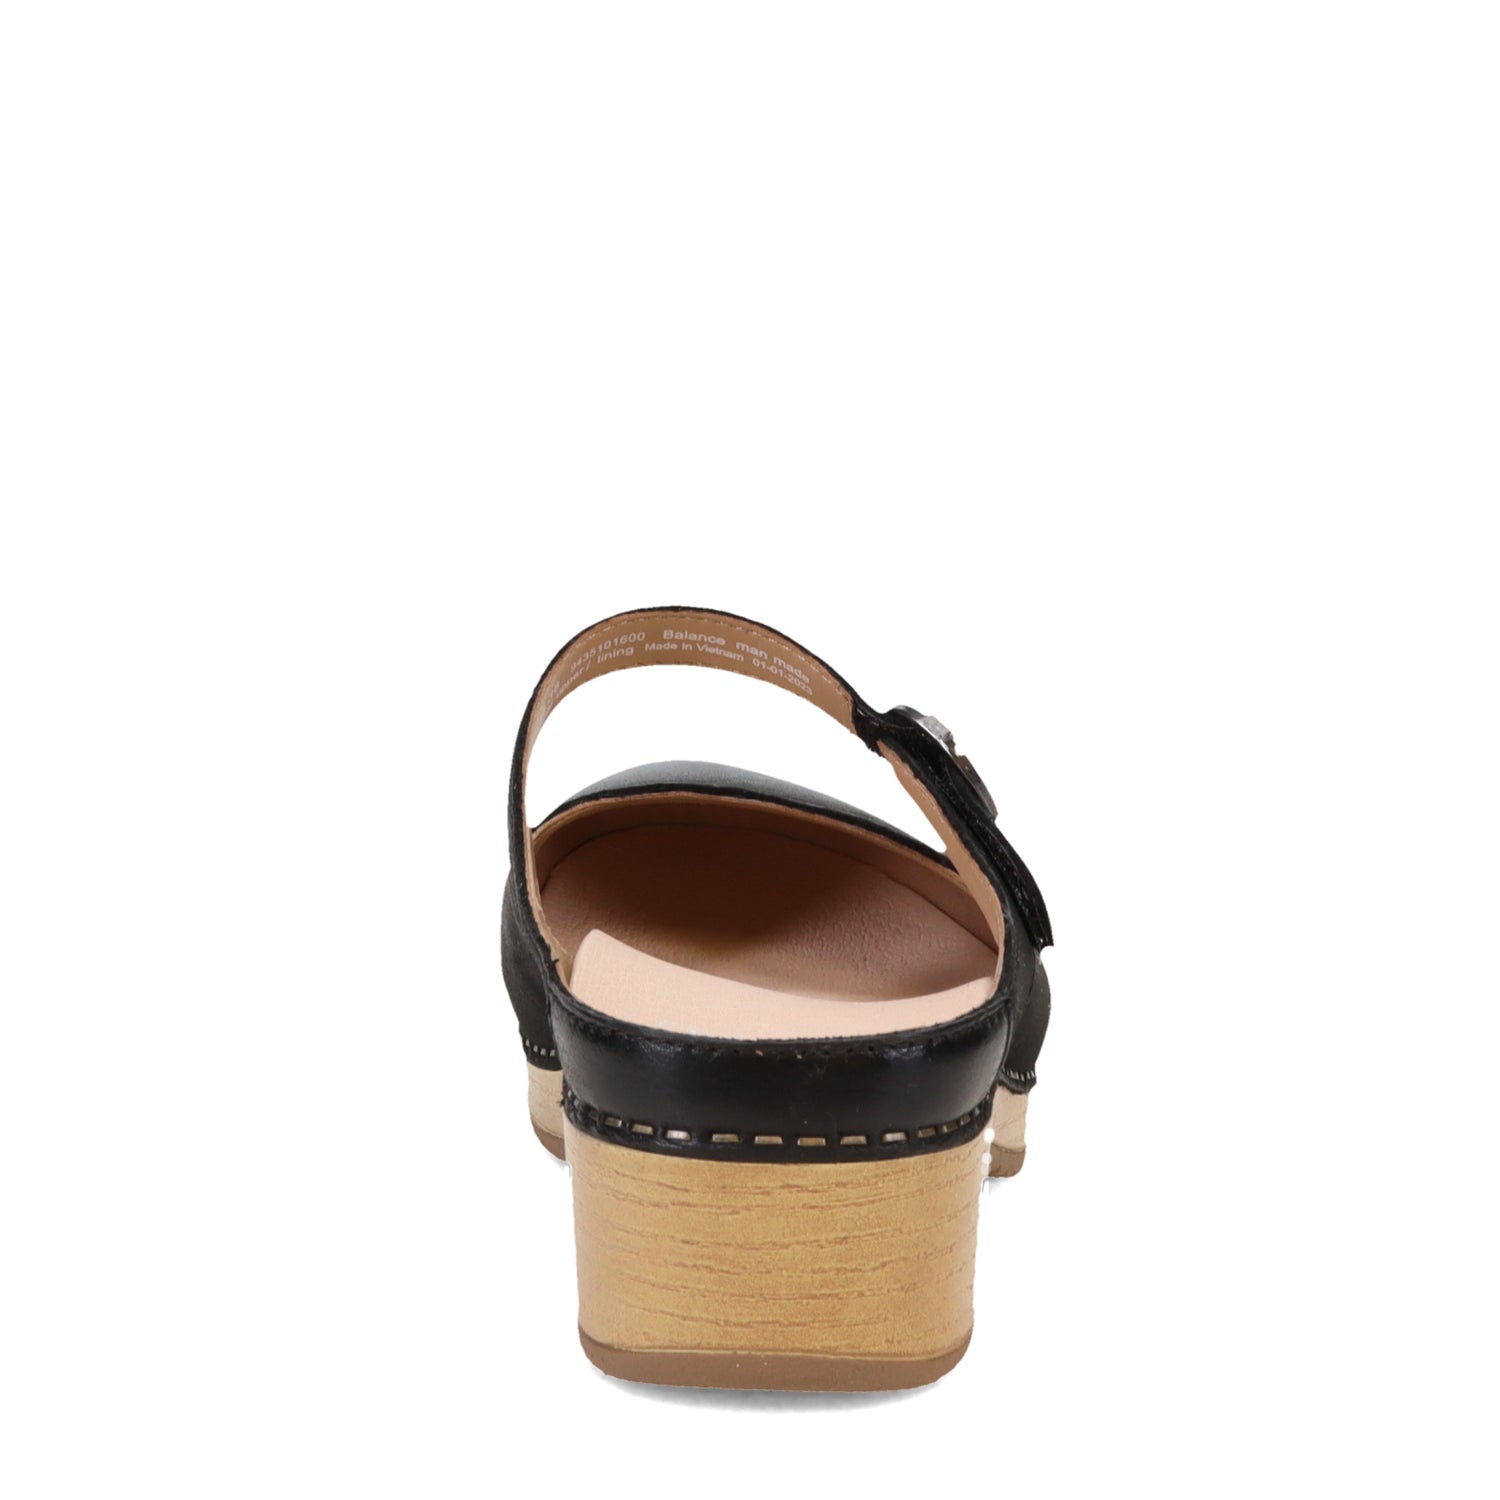 Peltz Shoes  Women's Dansko Bria Clog Black 9435-101600